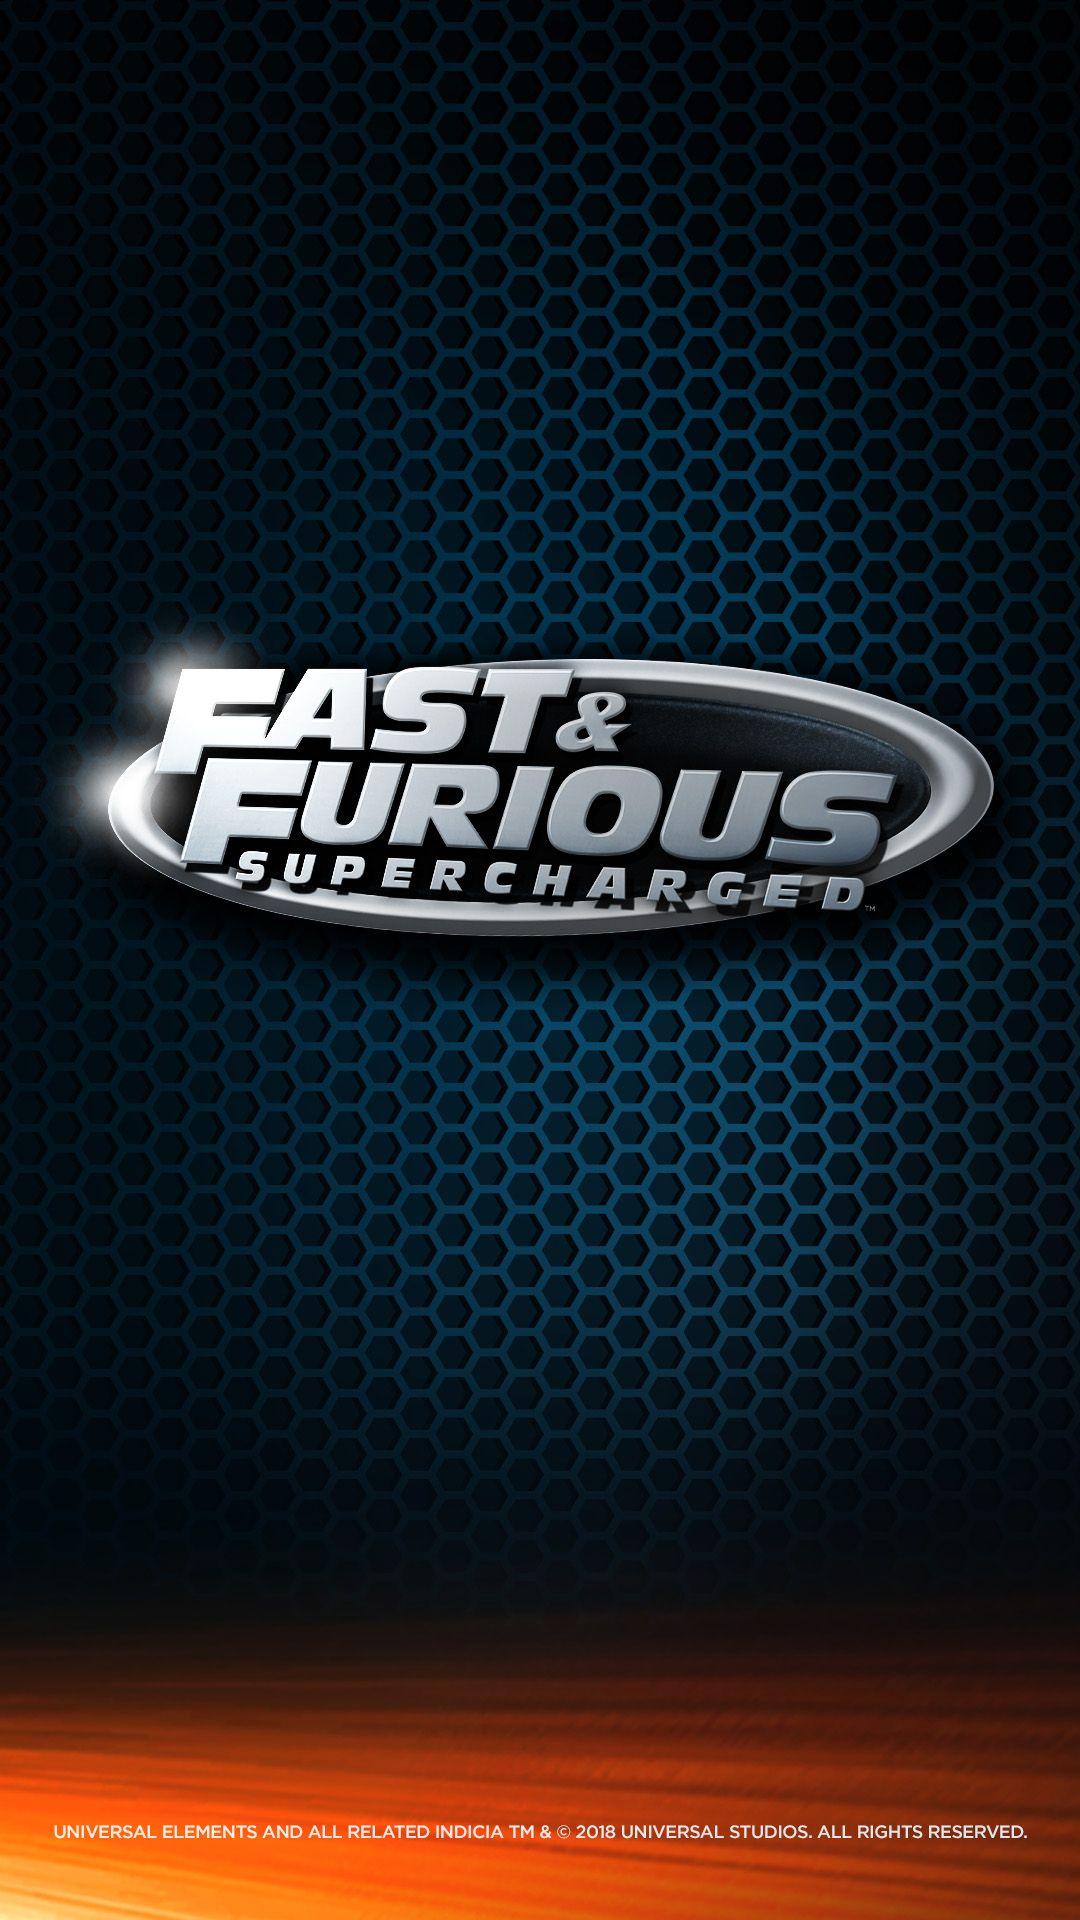 Universal Orlando Close Up. New Fast & Furious